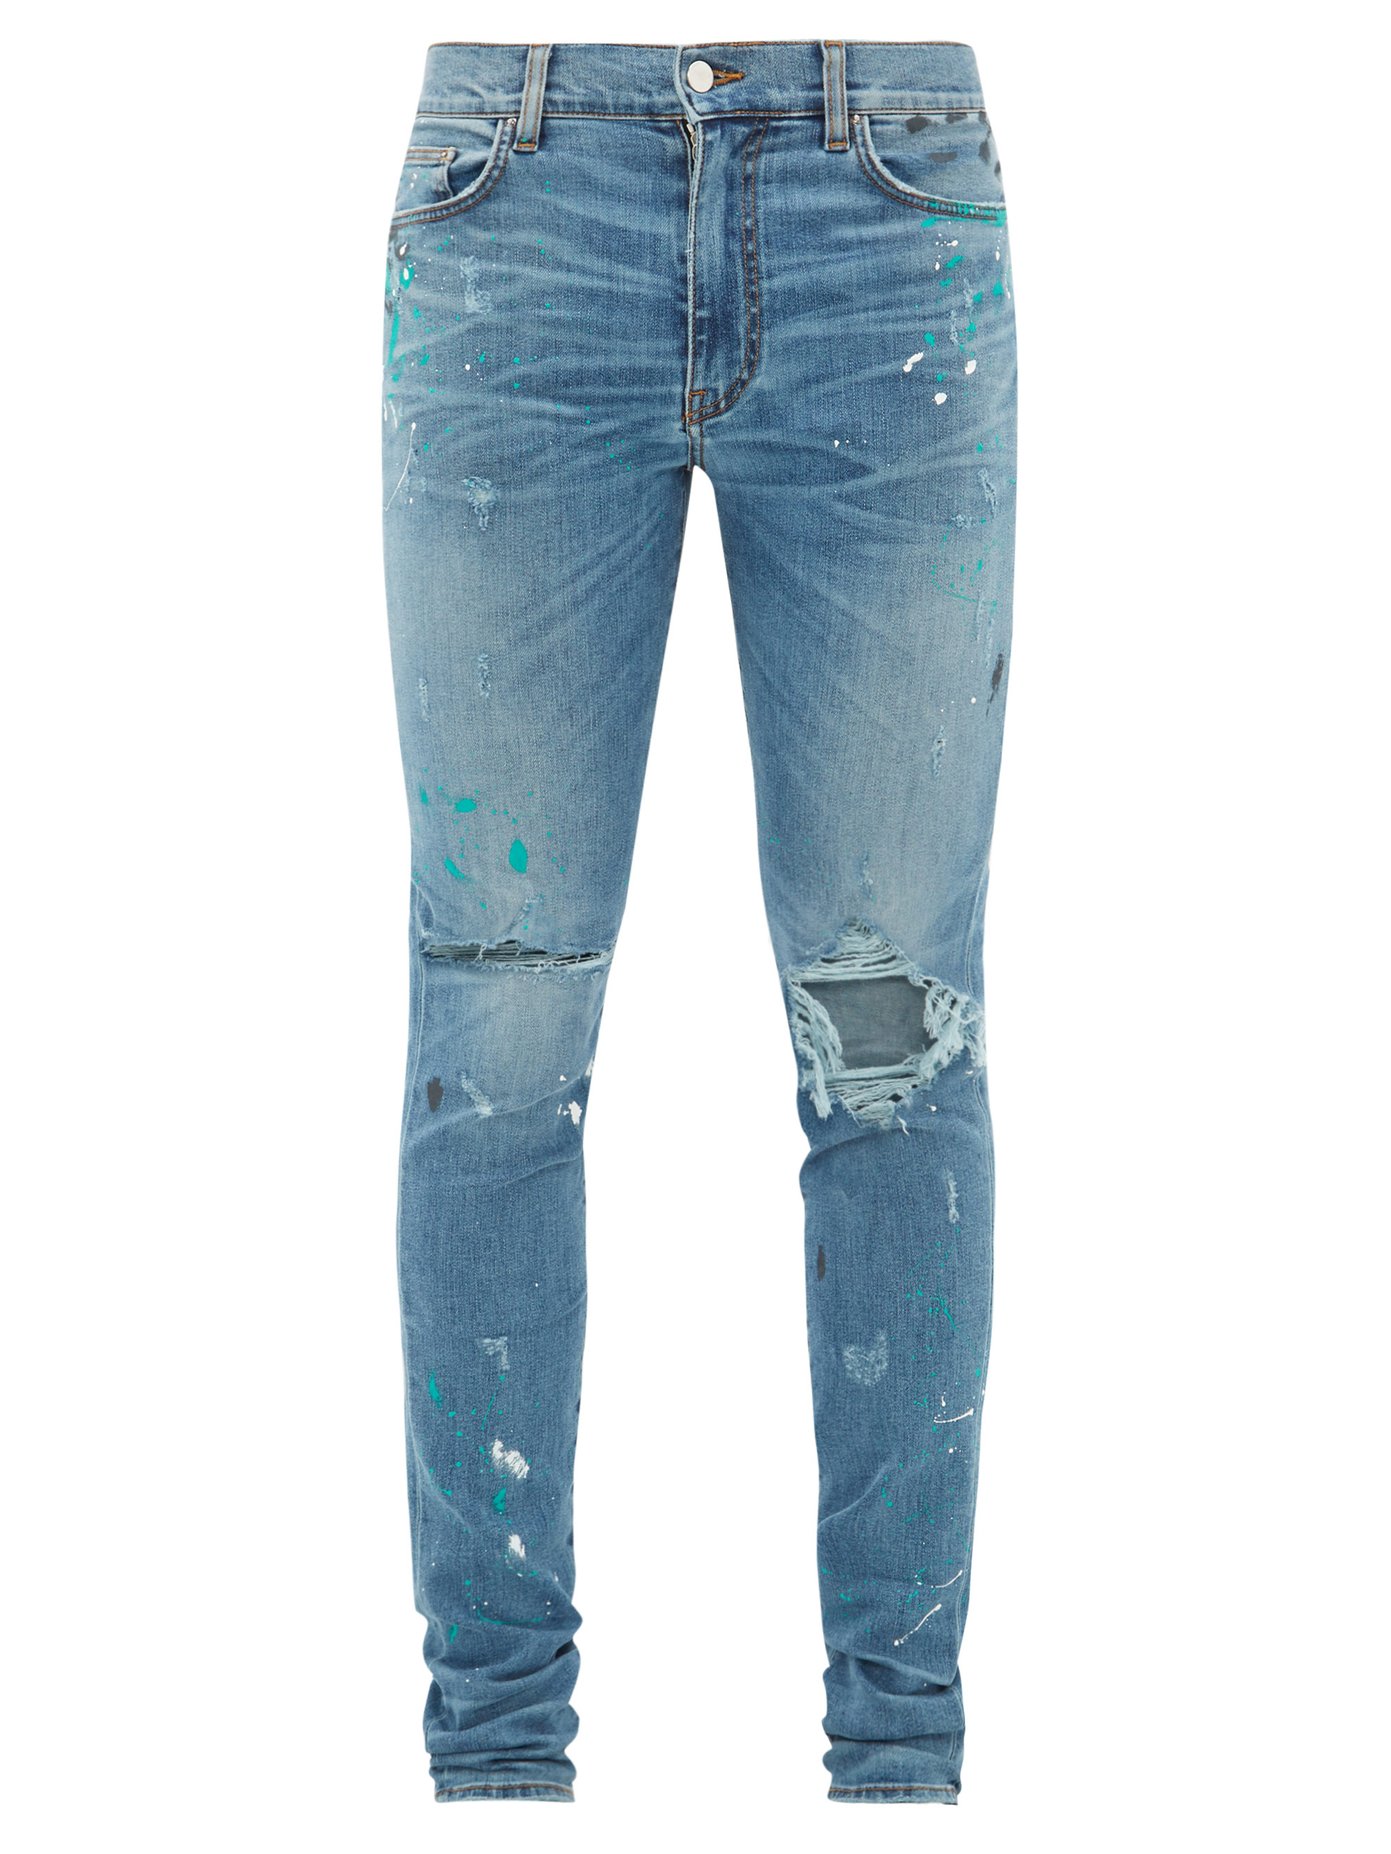 amiri paint splatter jeans